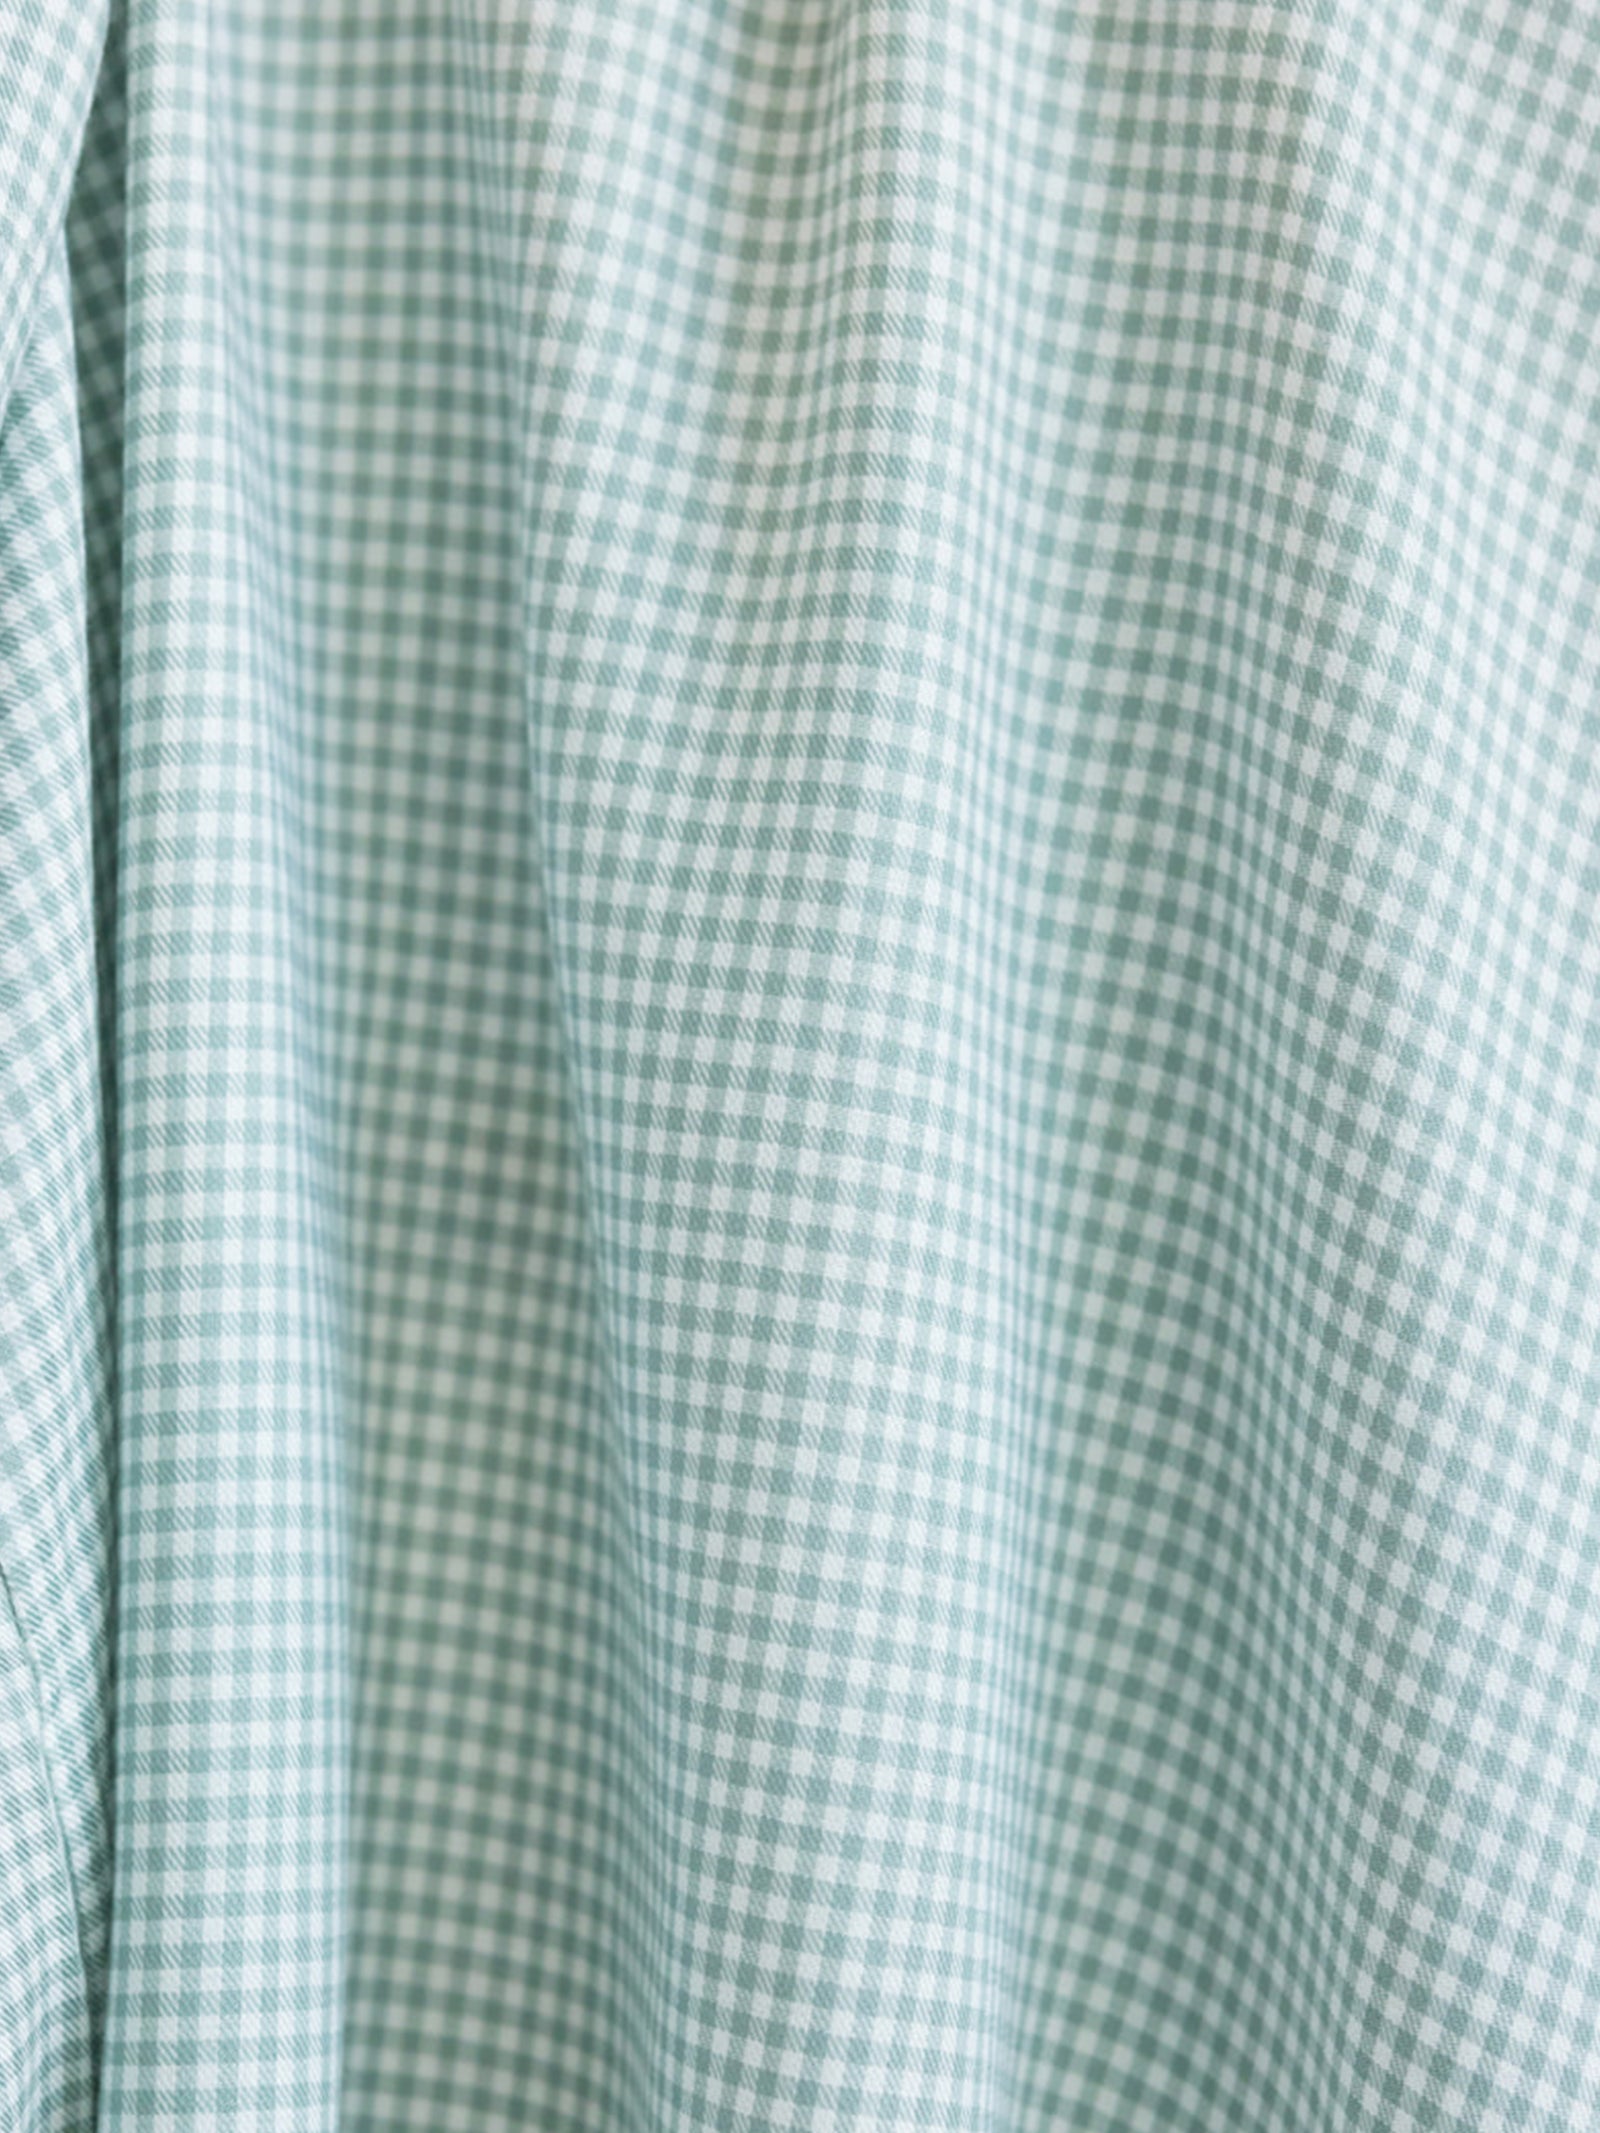 Close up of Haze Mini Gingham Soft Woven Pajama material 